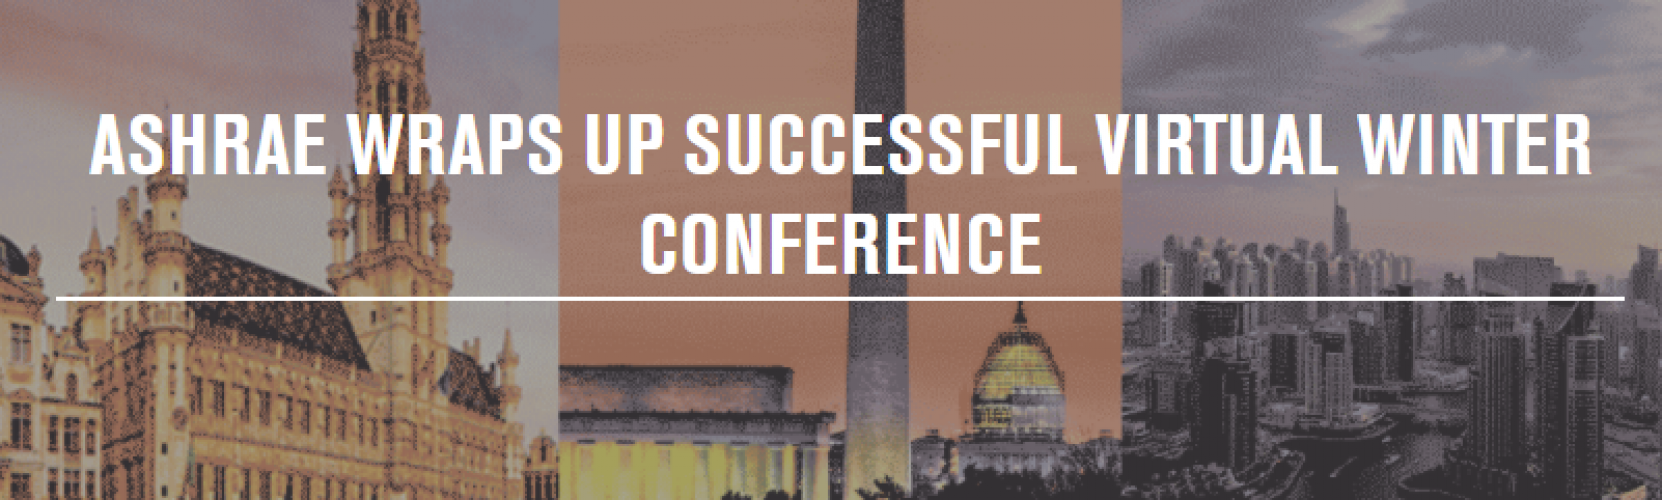 ashrae-wraps-up-successful-virtual-winter-conference